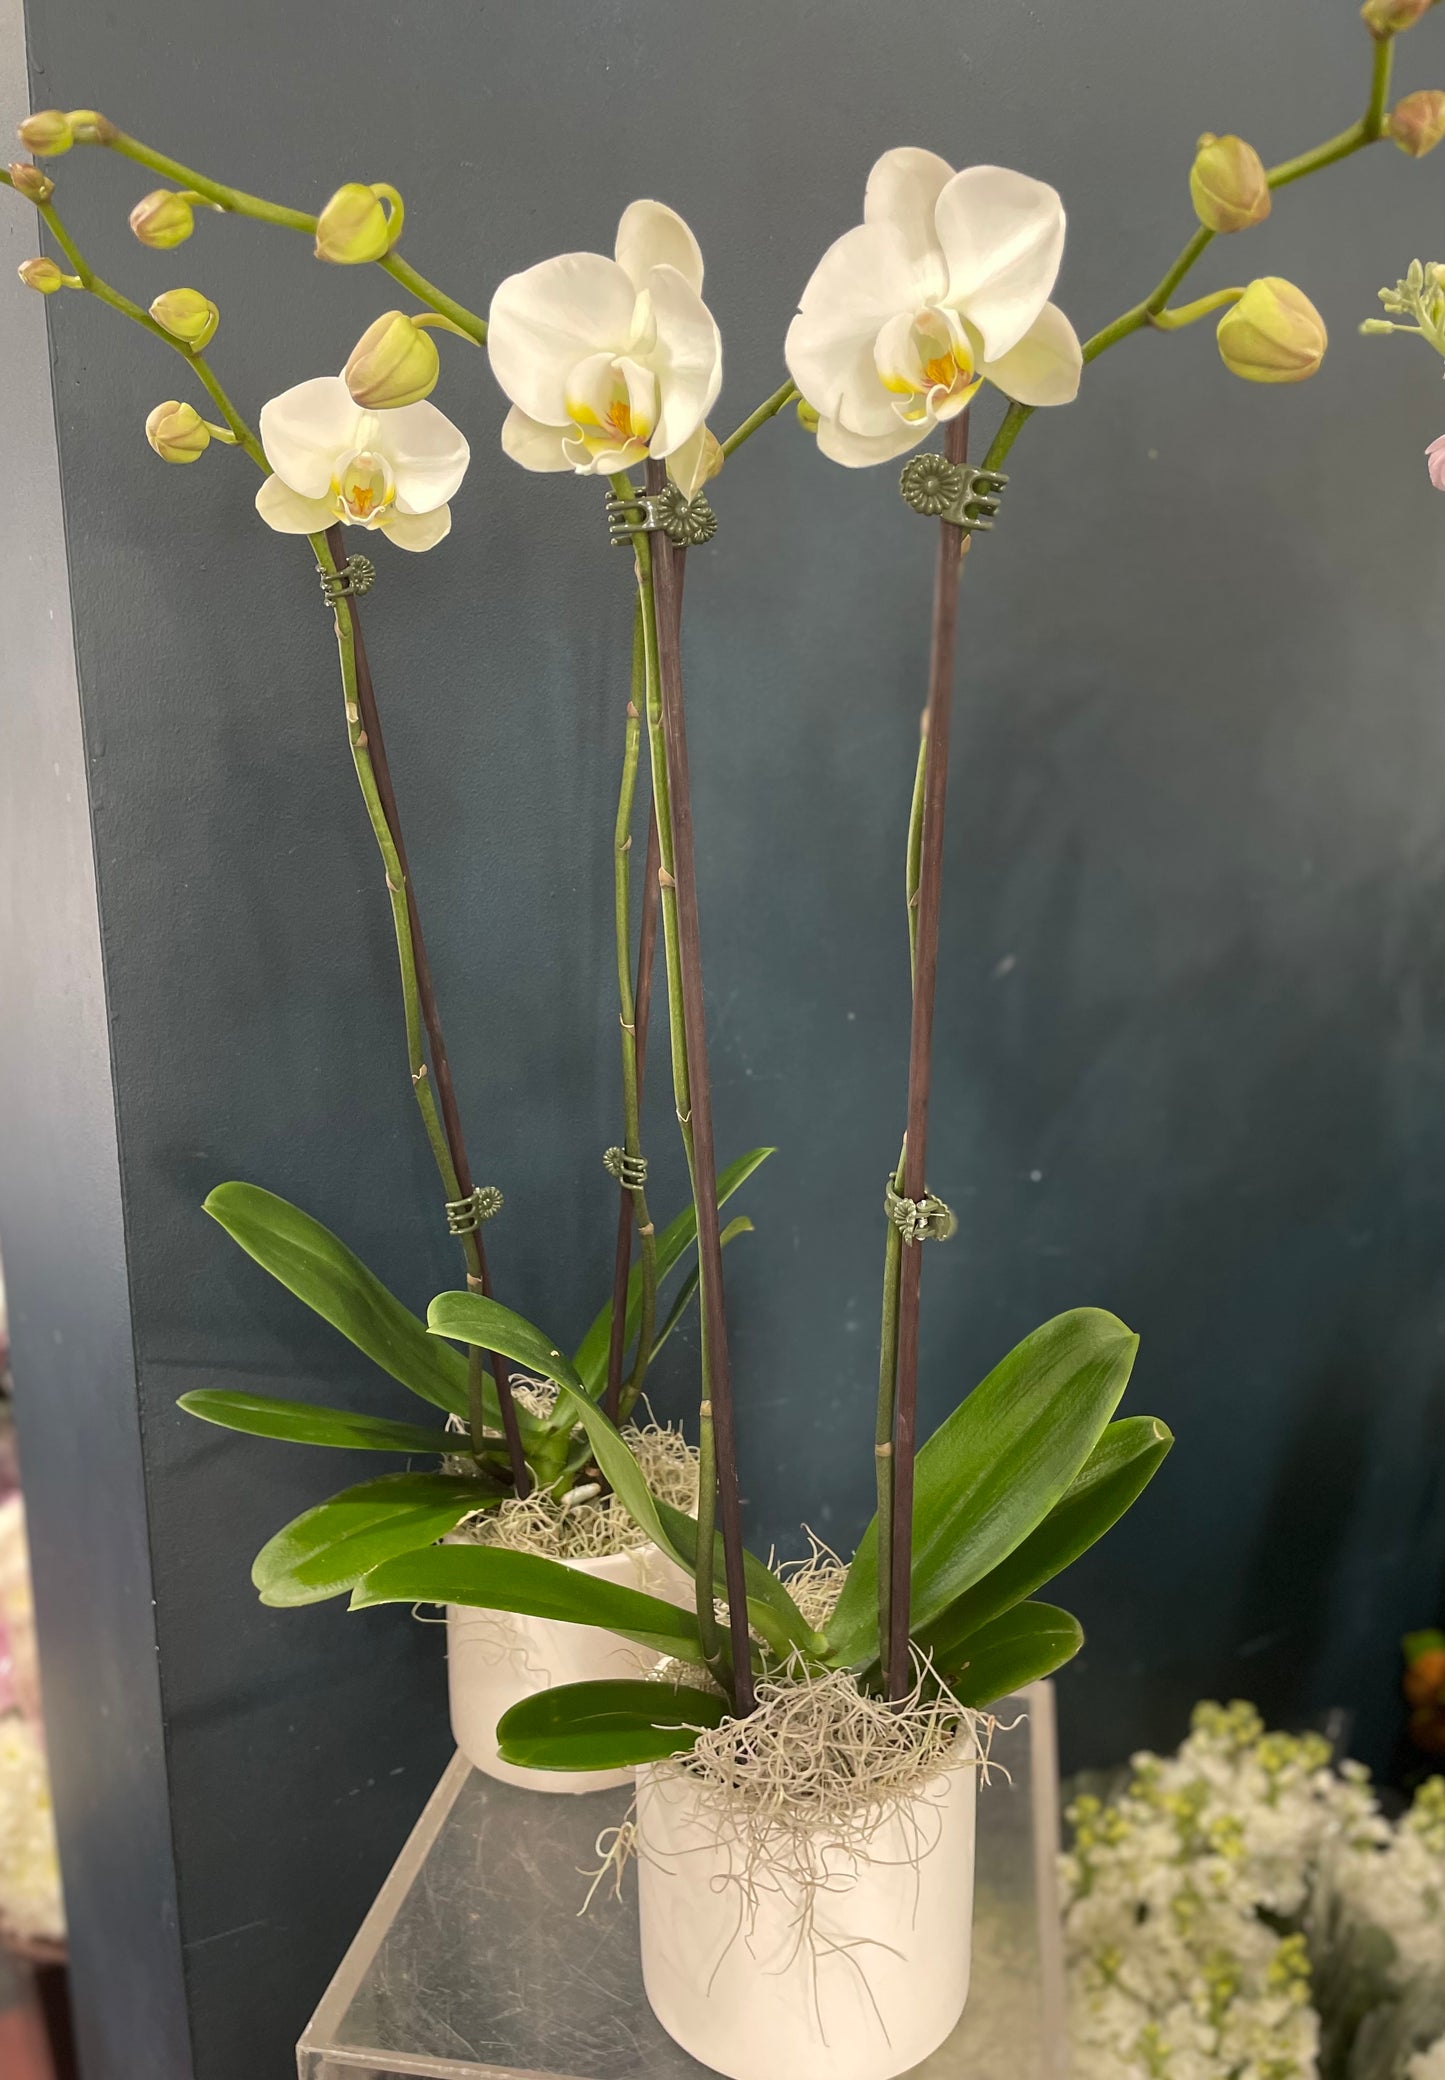 Phaelanopsis orchid